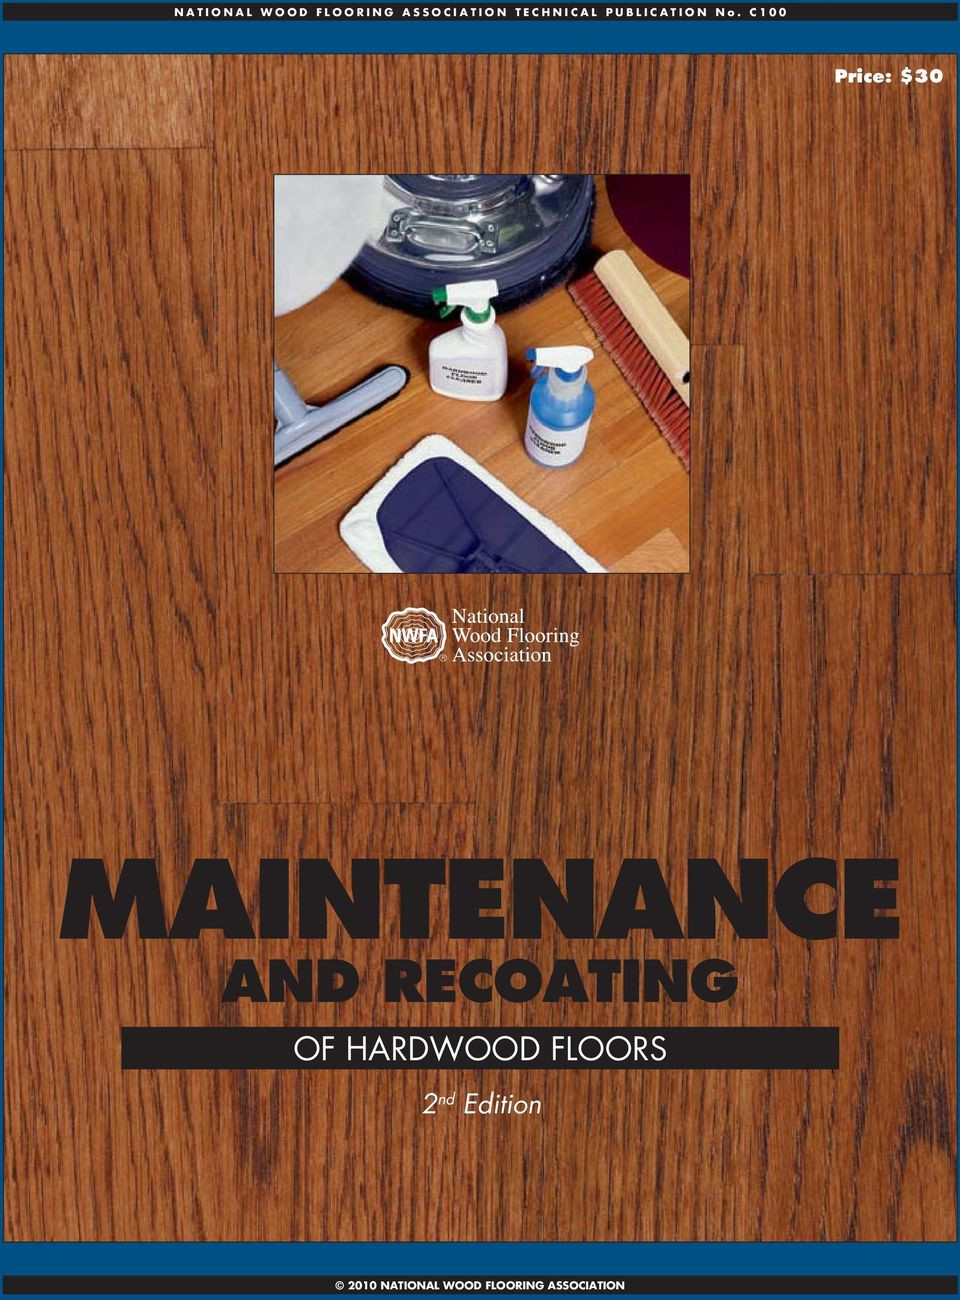 21 Wonderful Hardwood Flooring Aurora Ontario 2024 free download hardwood flooring aurora ontario of maintenance and recoating of hardwood floors 2 nd edition price within floors 2 nd edition 2010